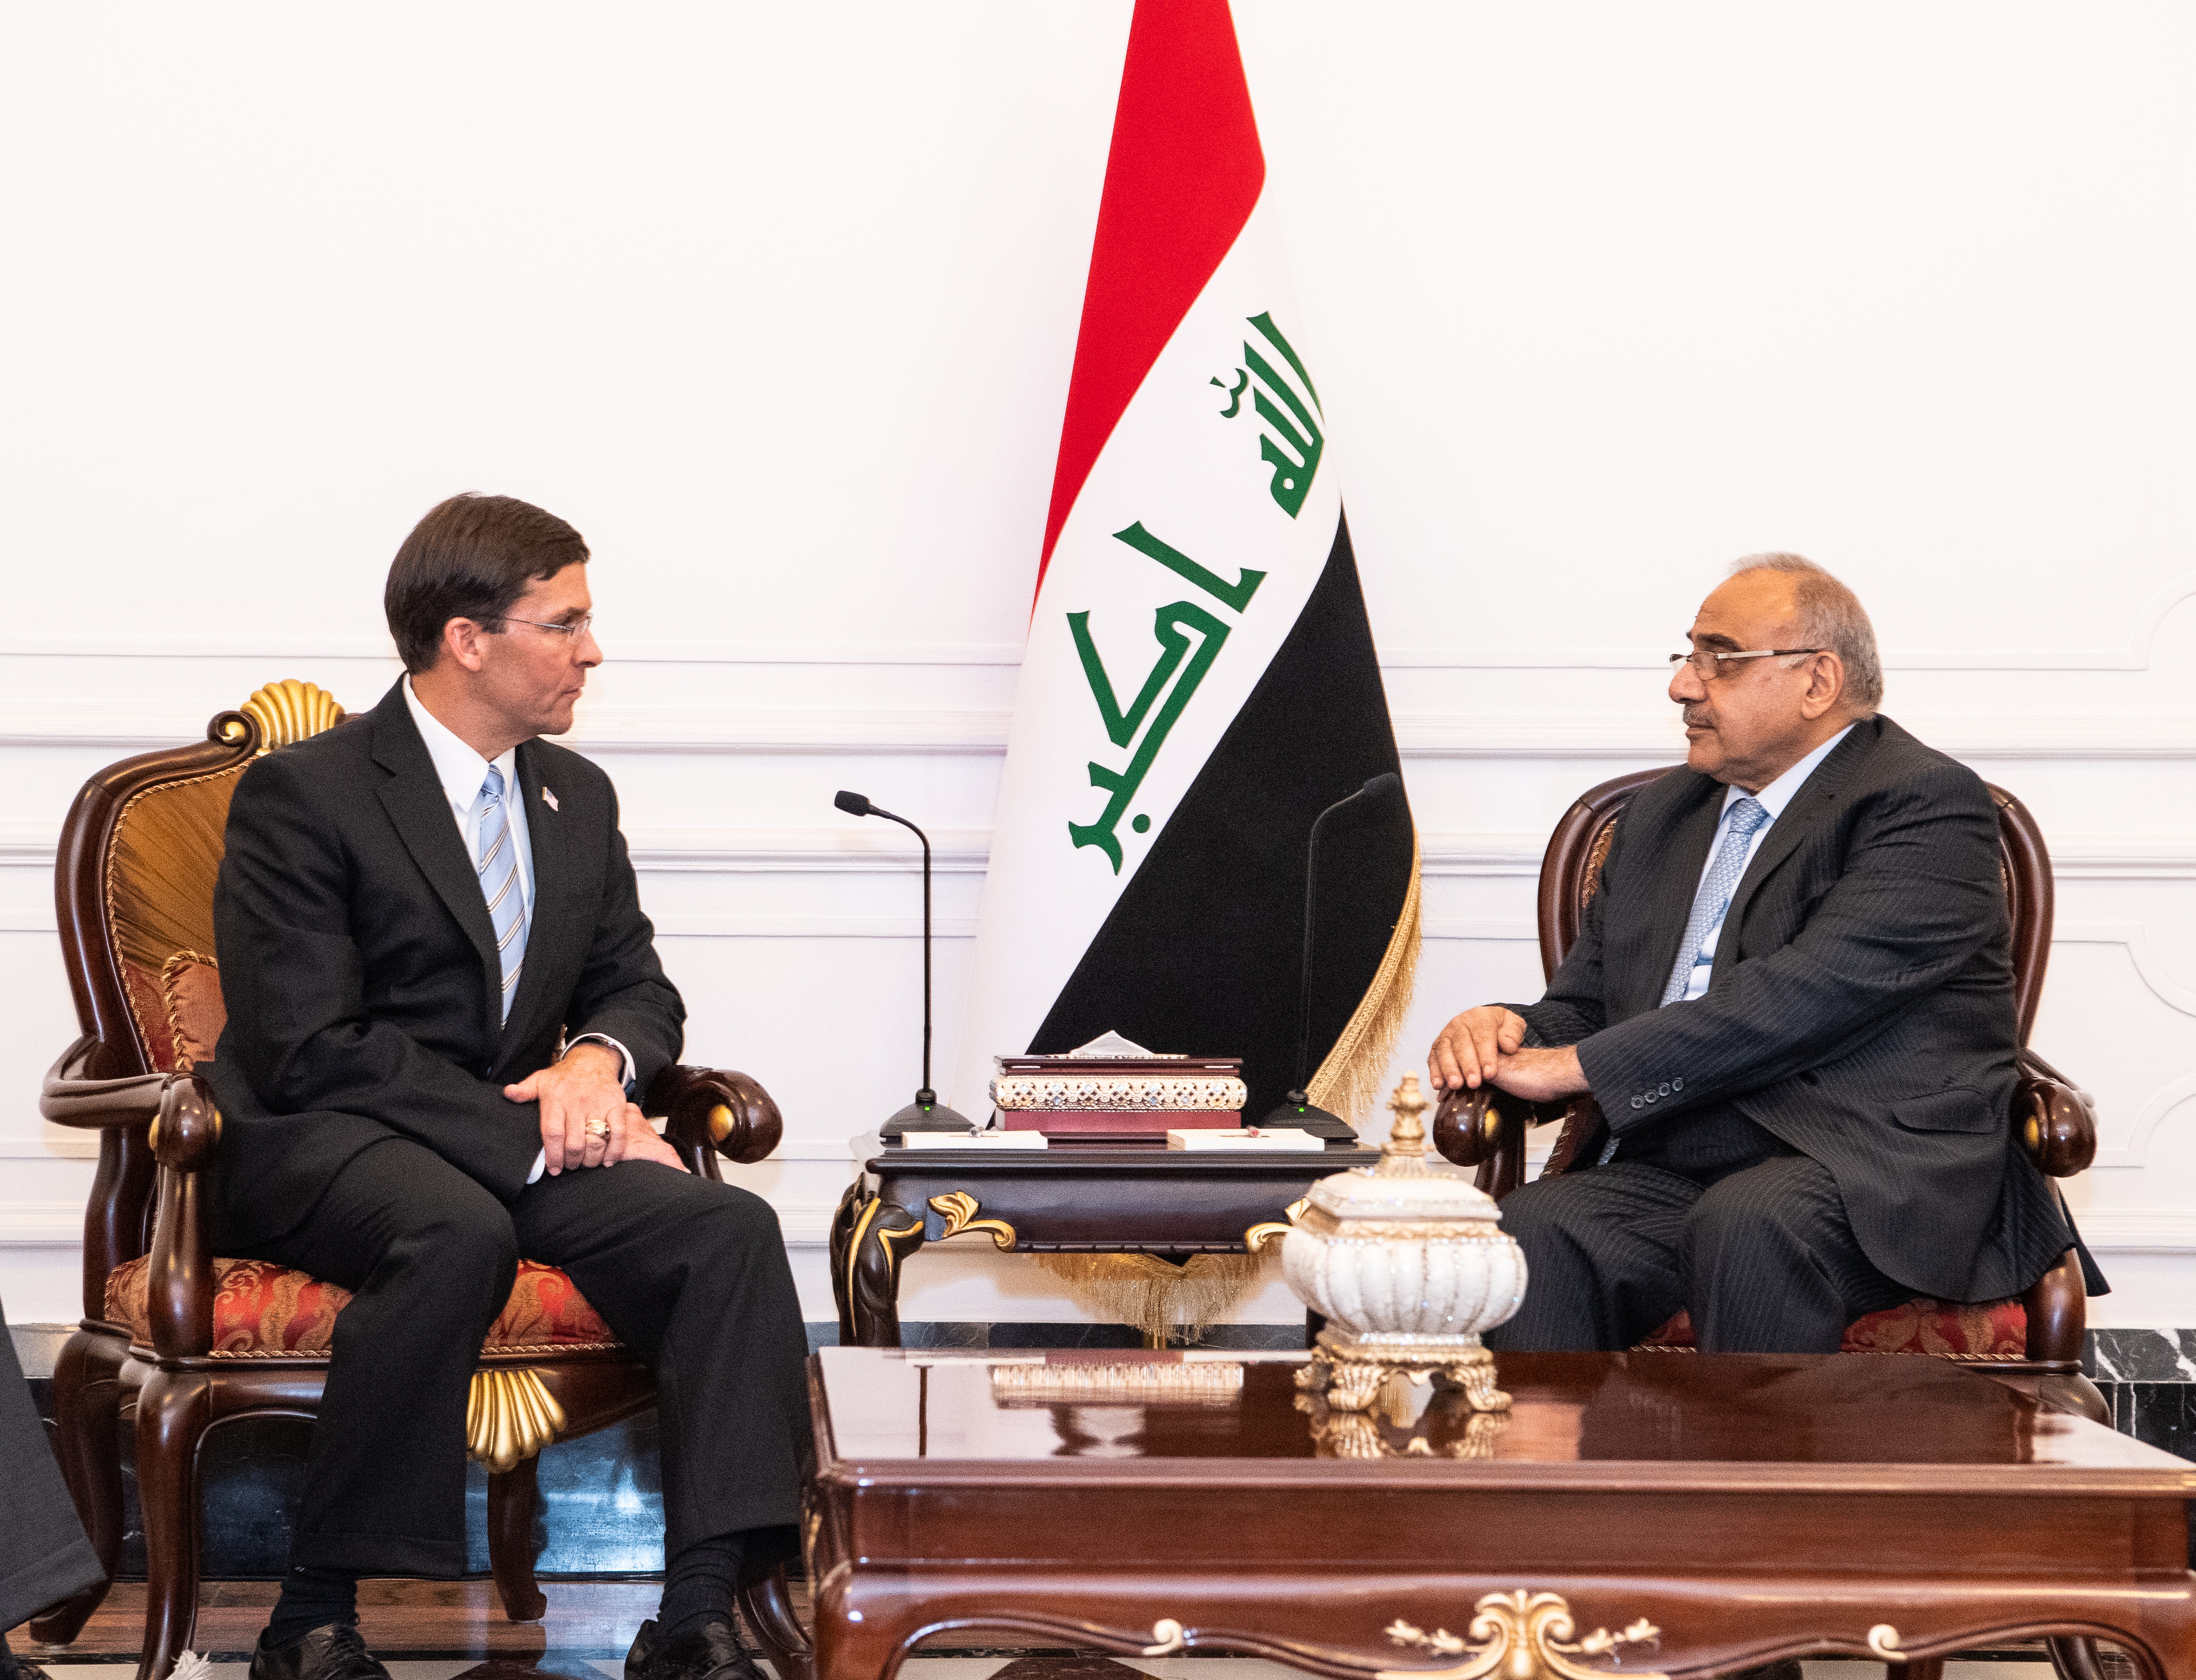 Outgoing Prime Minister Adel Abdul Mahdi of Iraq (photo credit: U.S. Secretary of Defense/flickr)